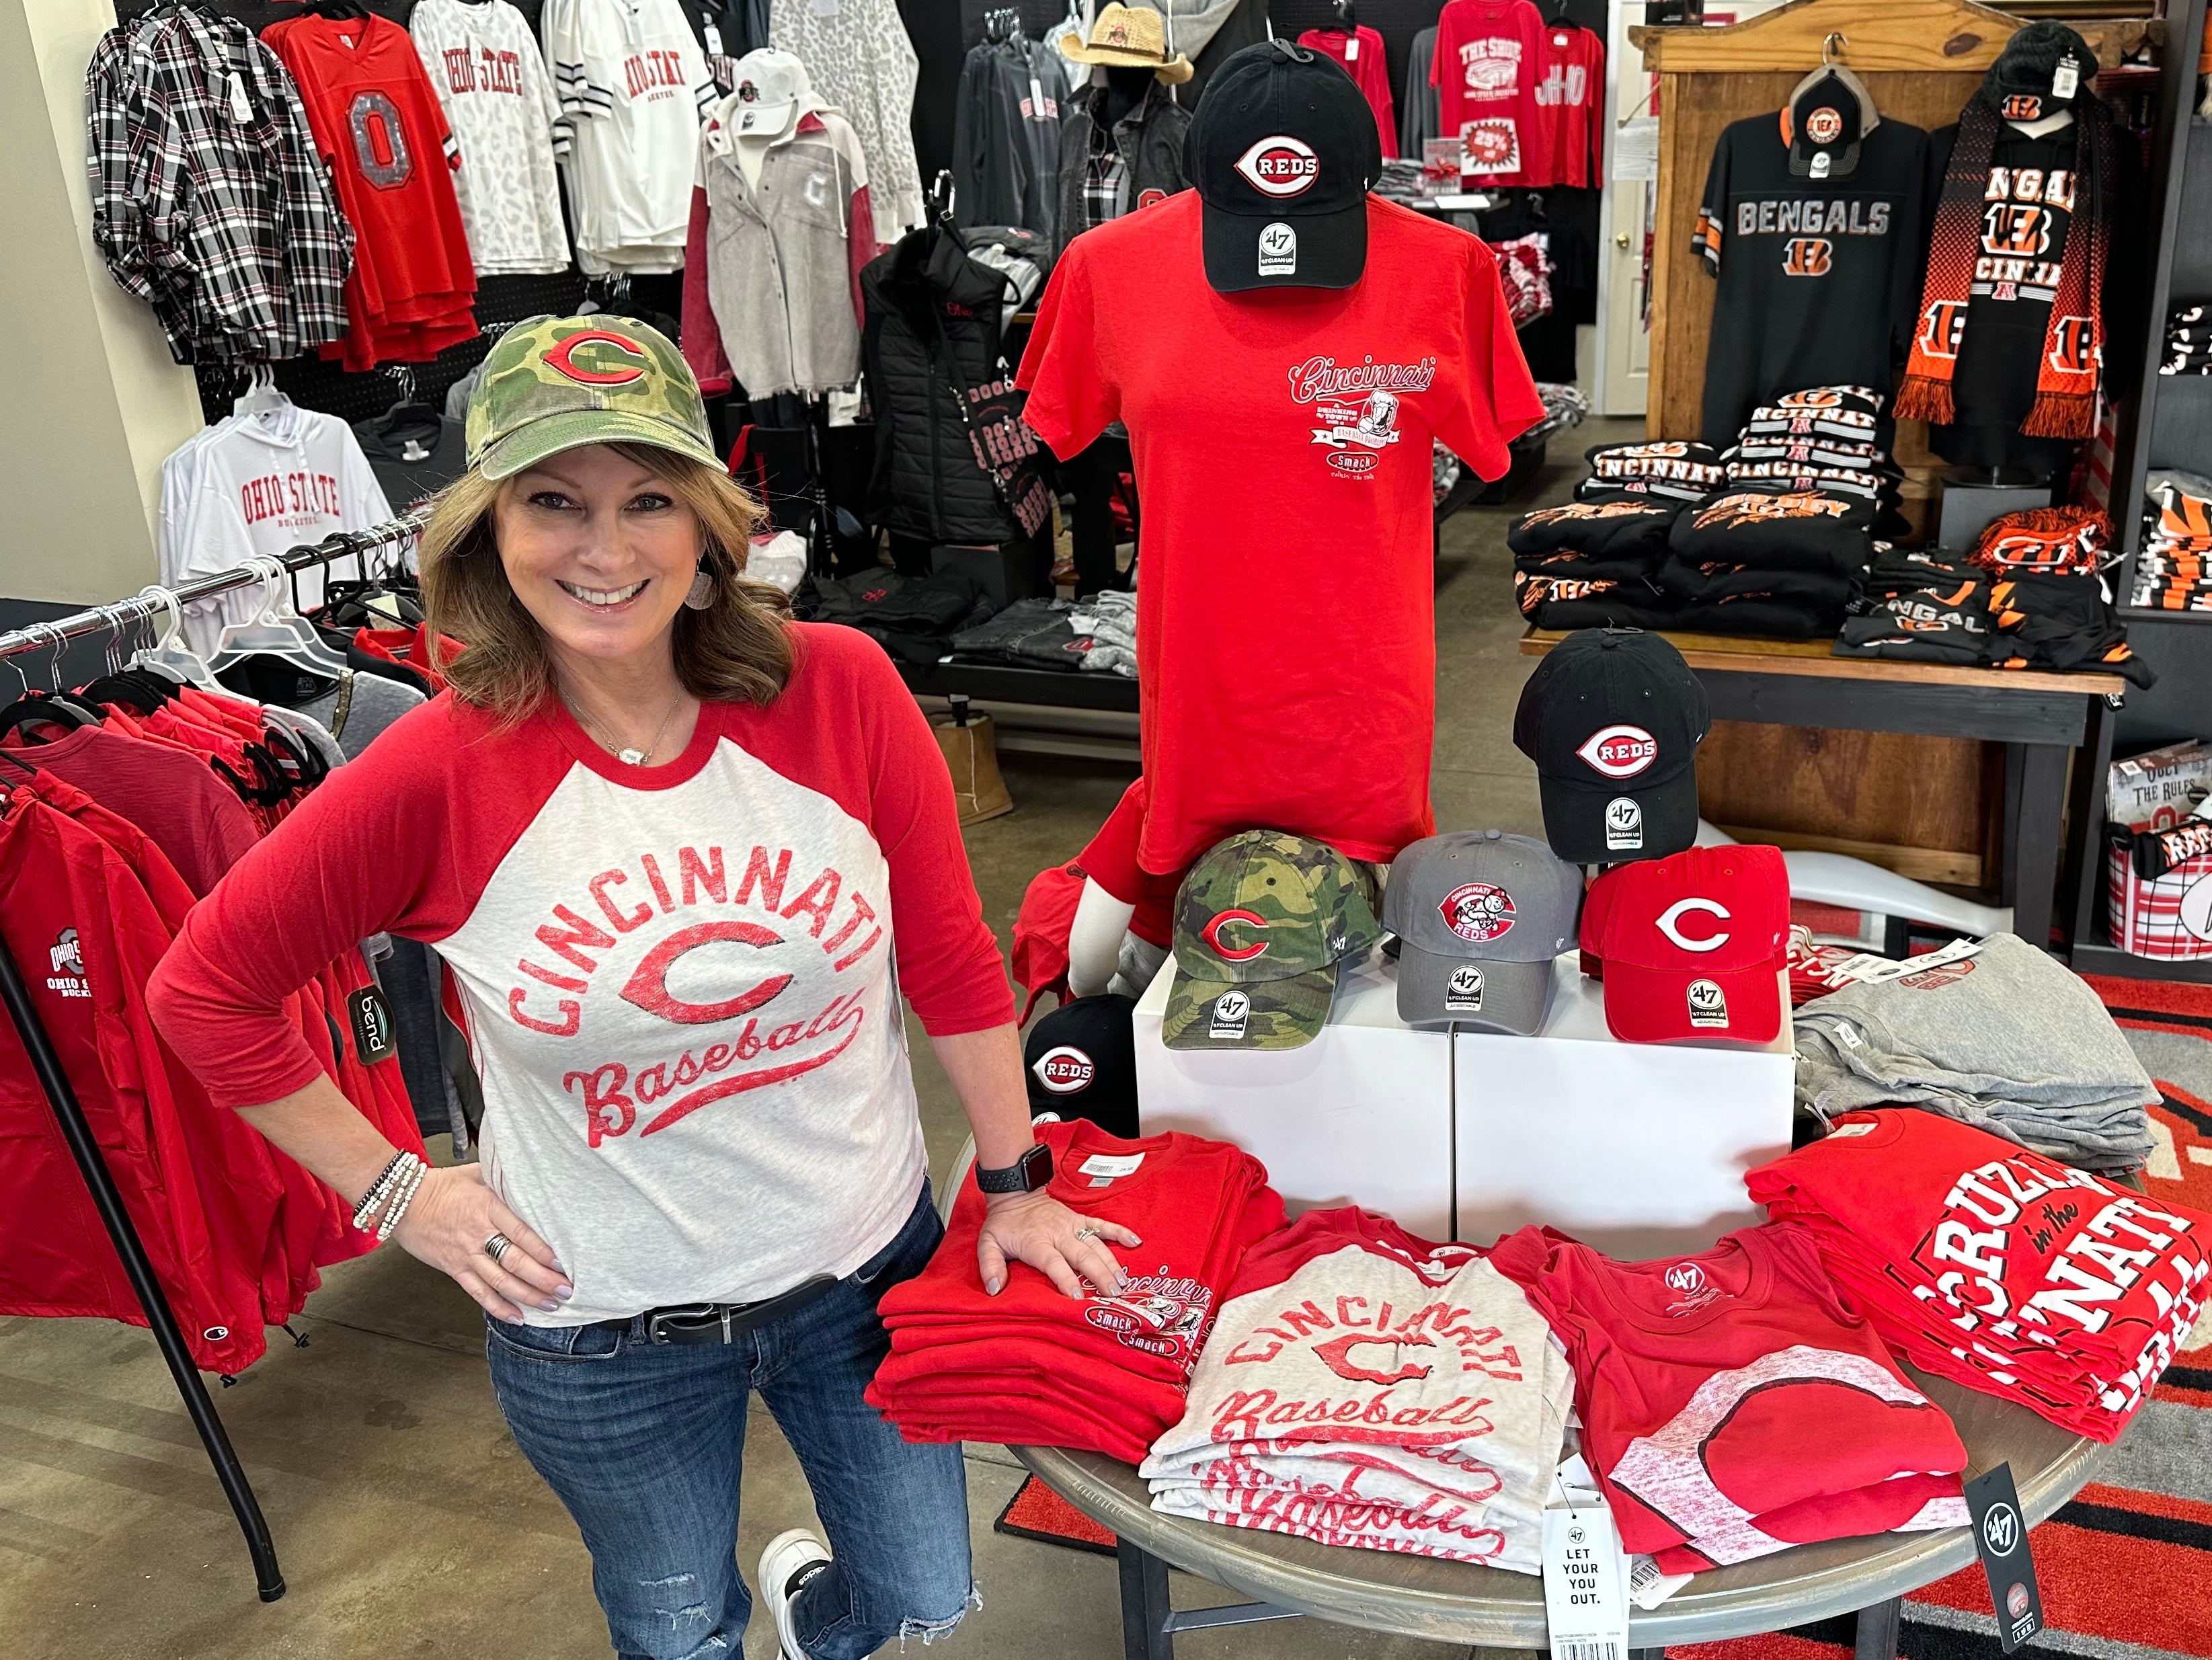 Lynn at store, Cincinnati Reds gear display